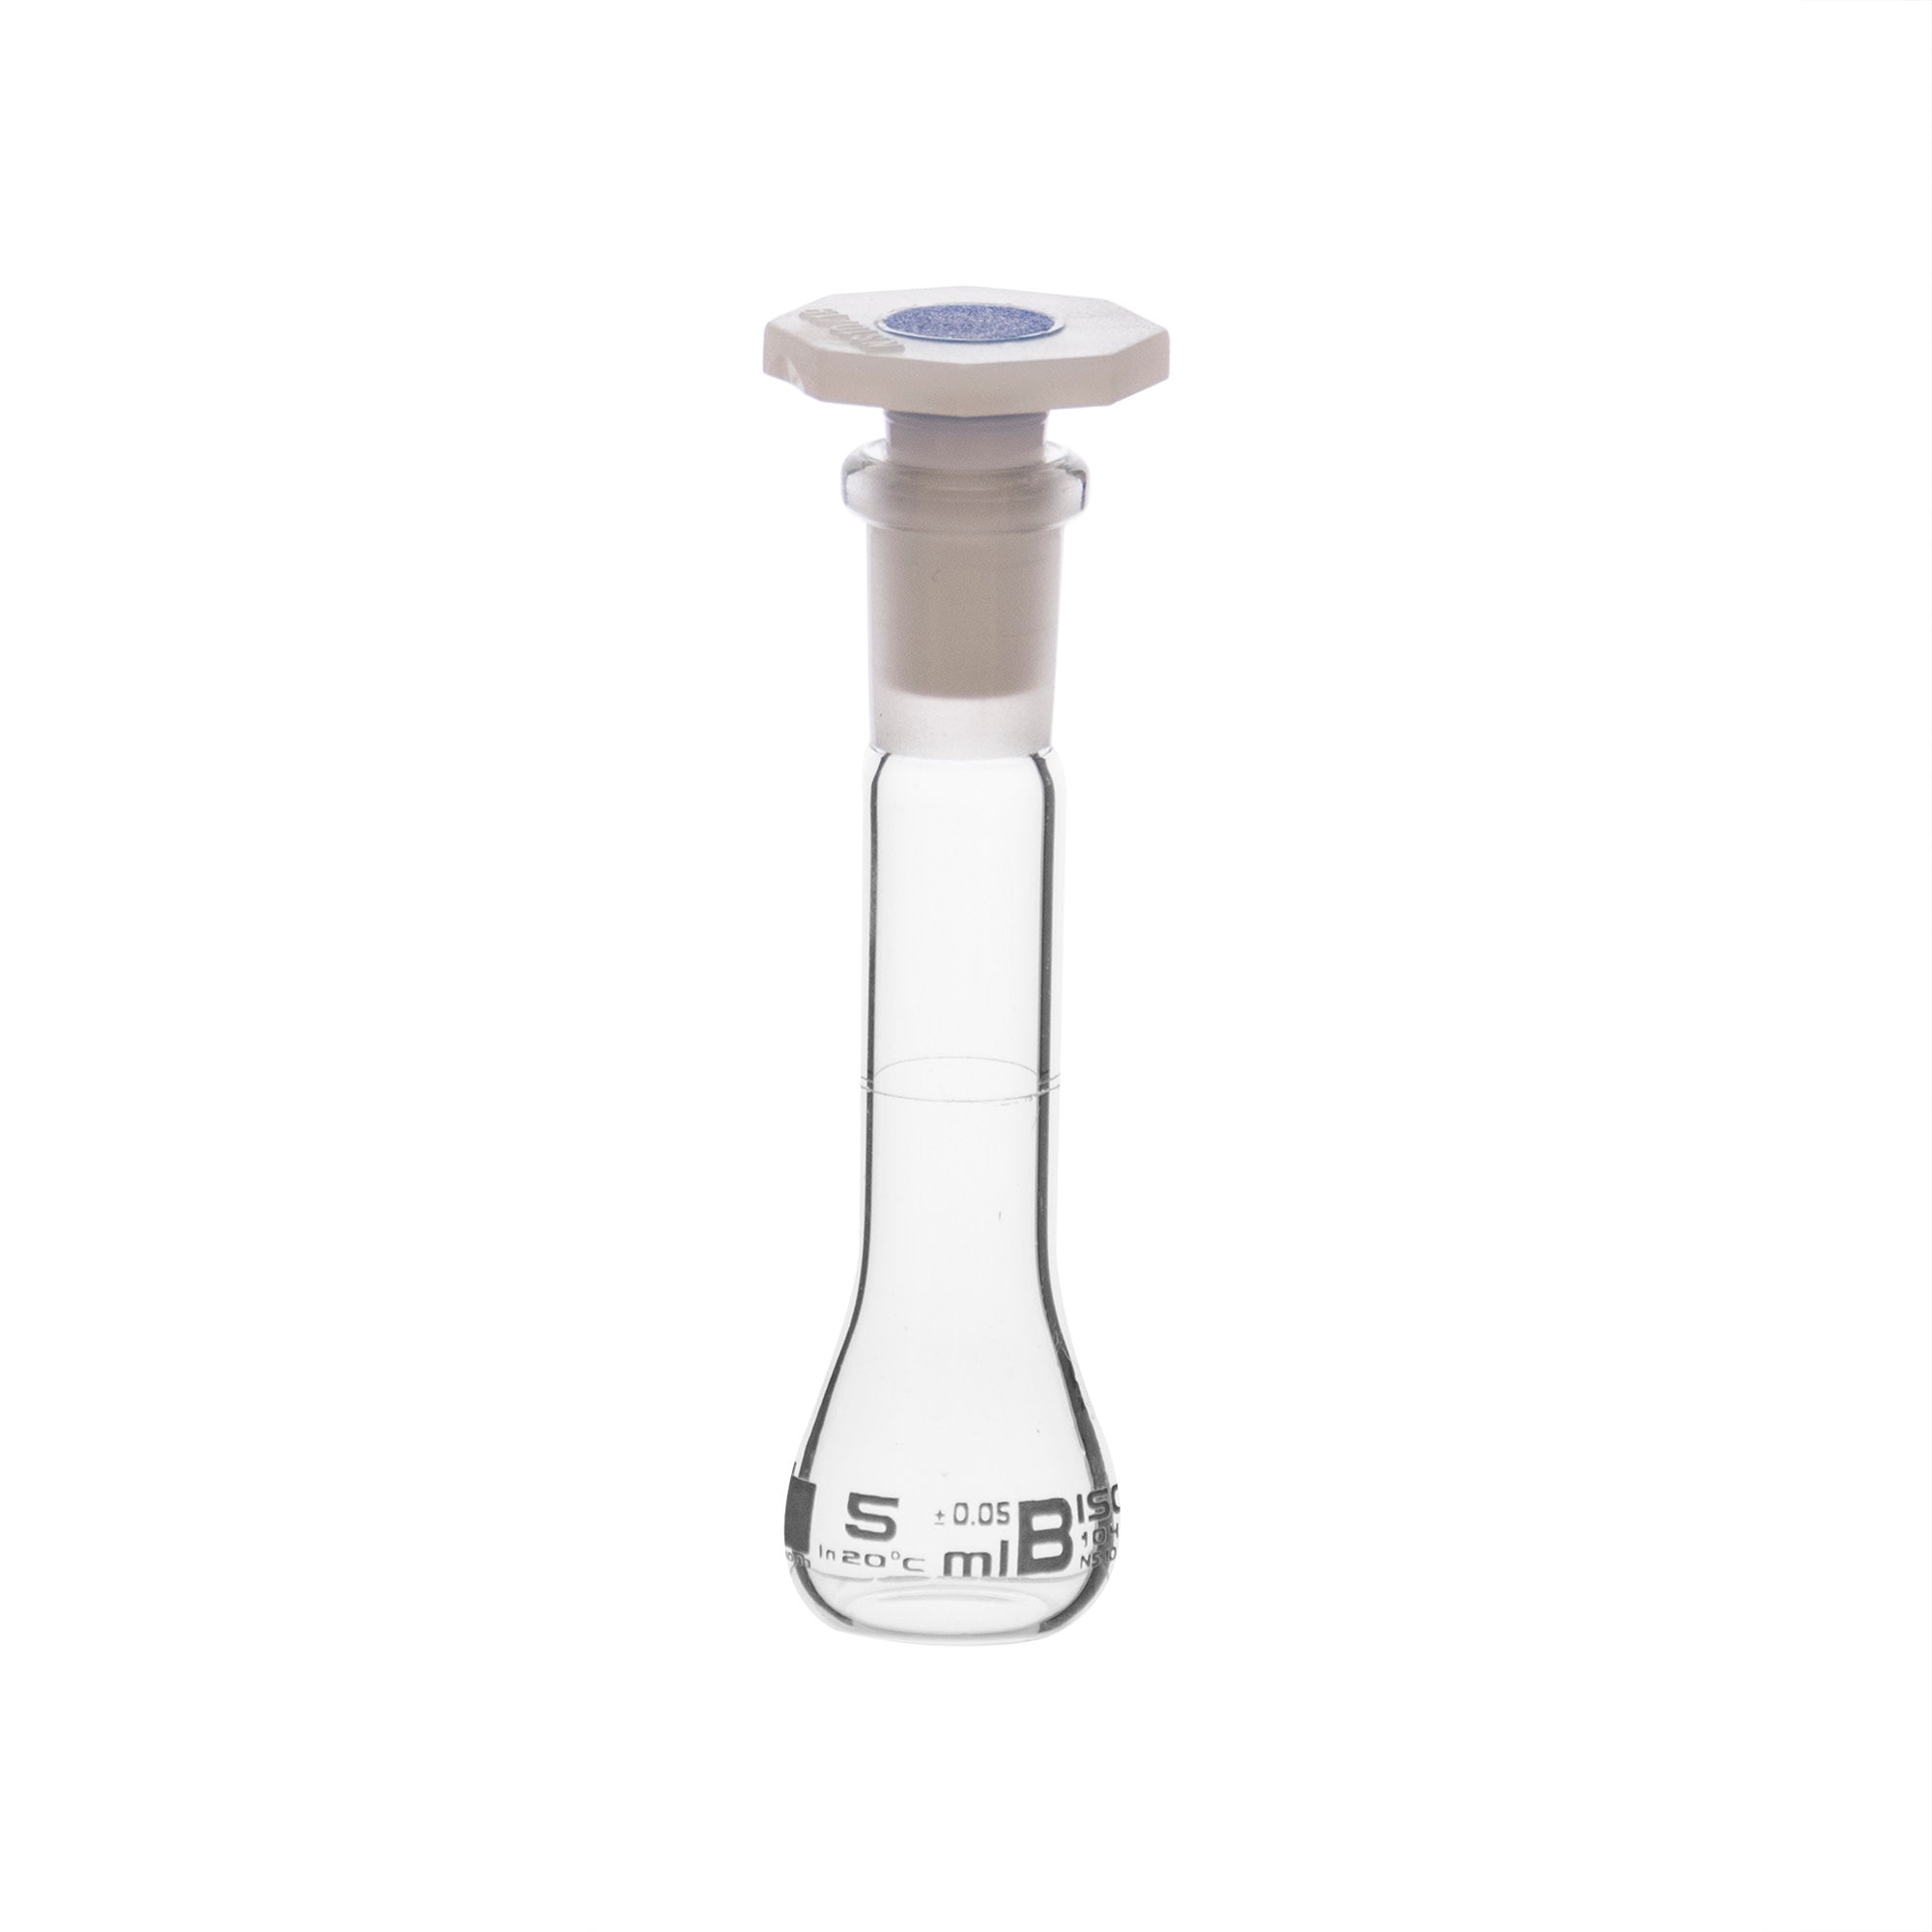 Borosilicate Glass Volumetric Flask with Polyethylene Stopper, 5ml, Class B, White Print, Autoclavable